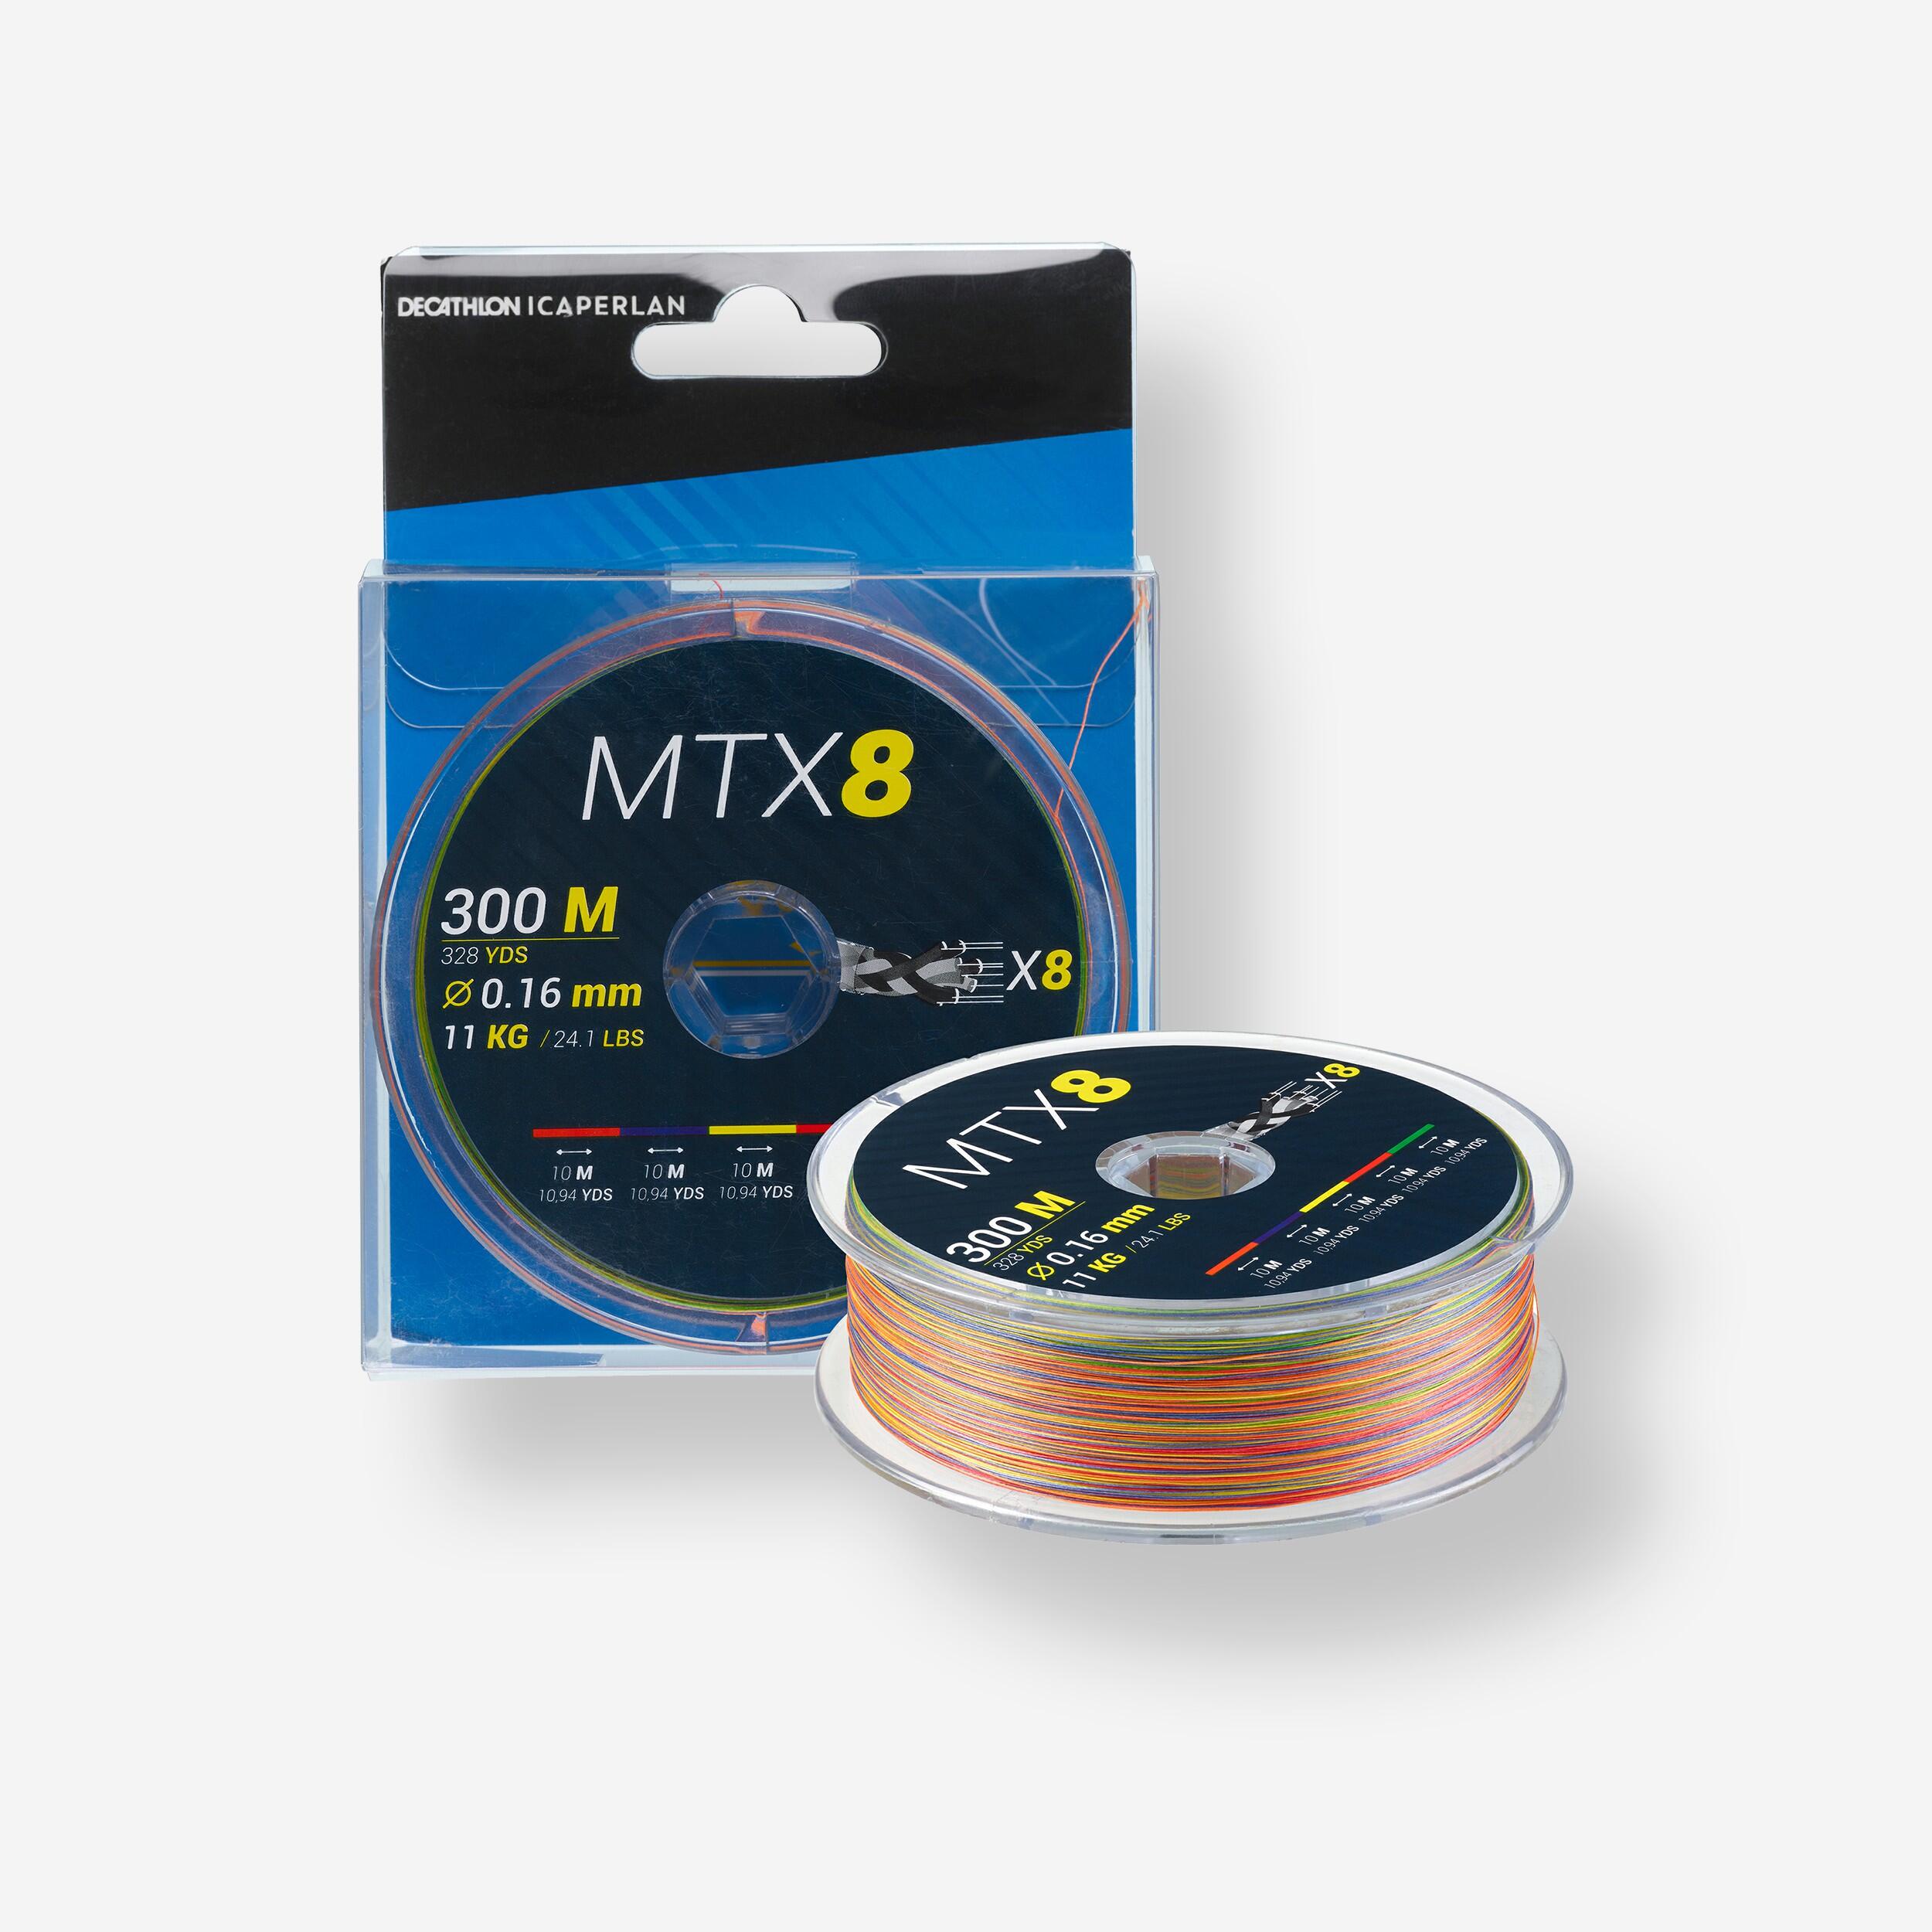 Fir textil 8 segmente MTX8 MULTICOLOR 300M 16/100 pescuit marin decathlon.ro  Accesorii pentru fir